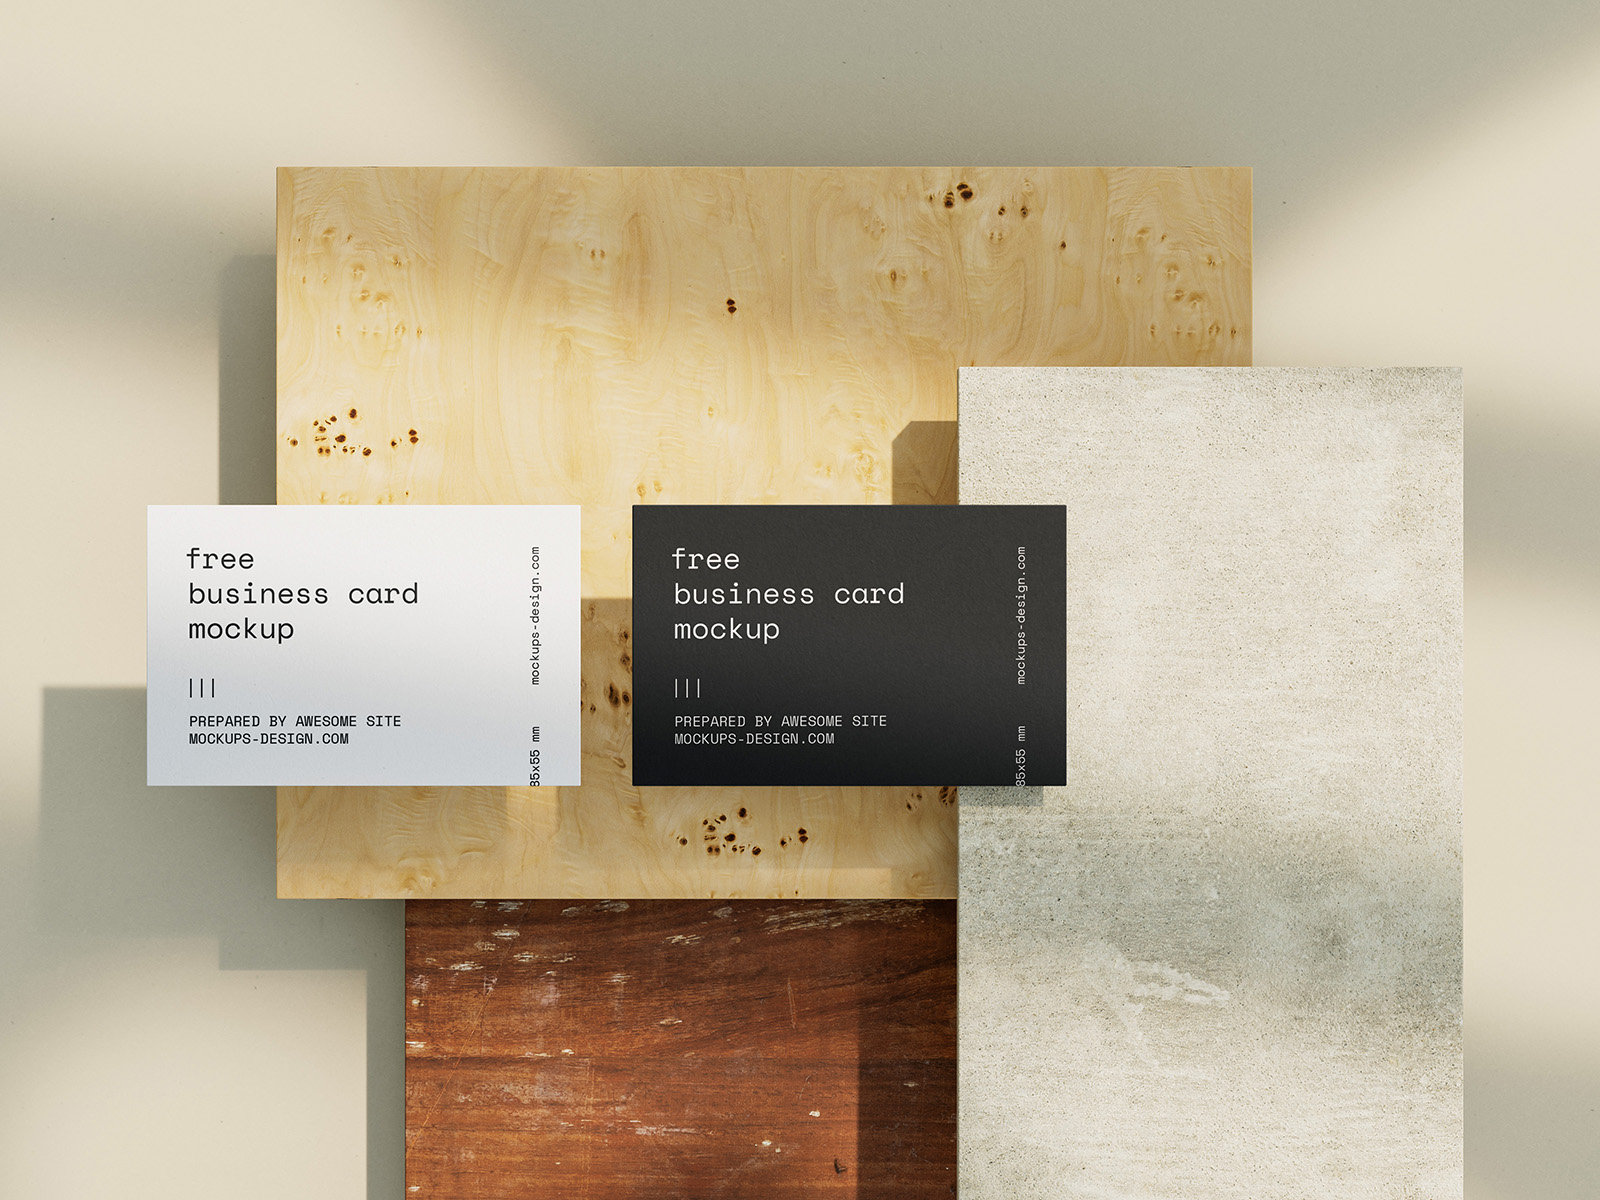 5 Varied Shots of Business Cards Mockups on Tiles FREE PSD